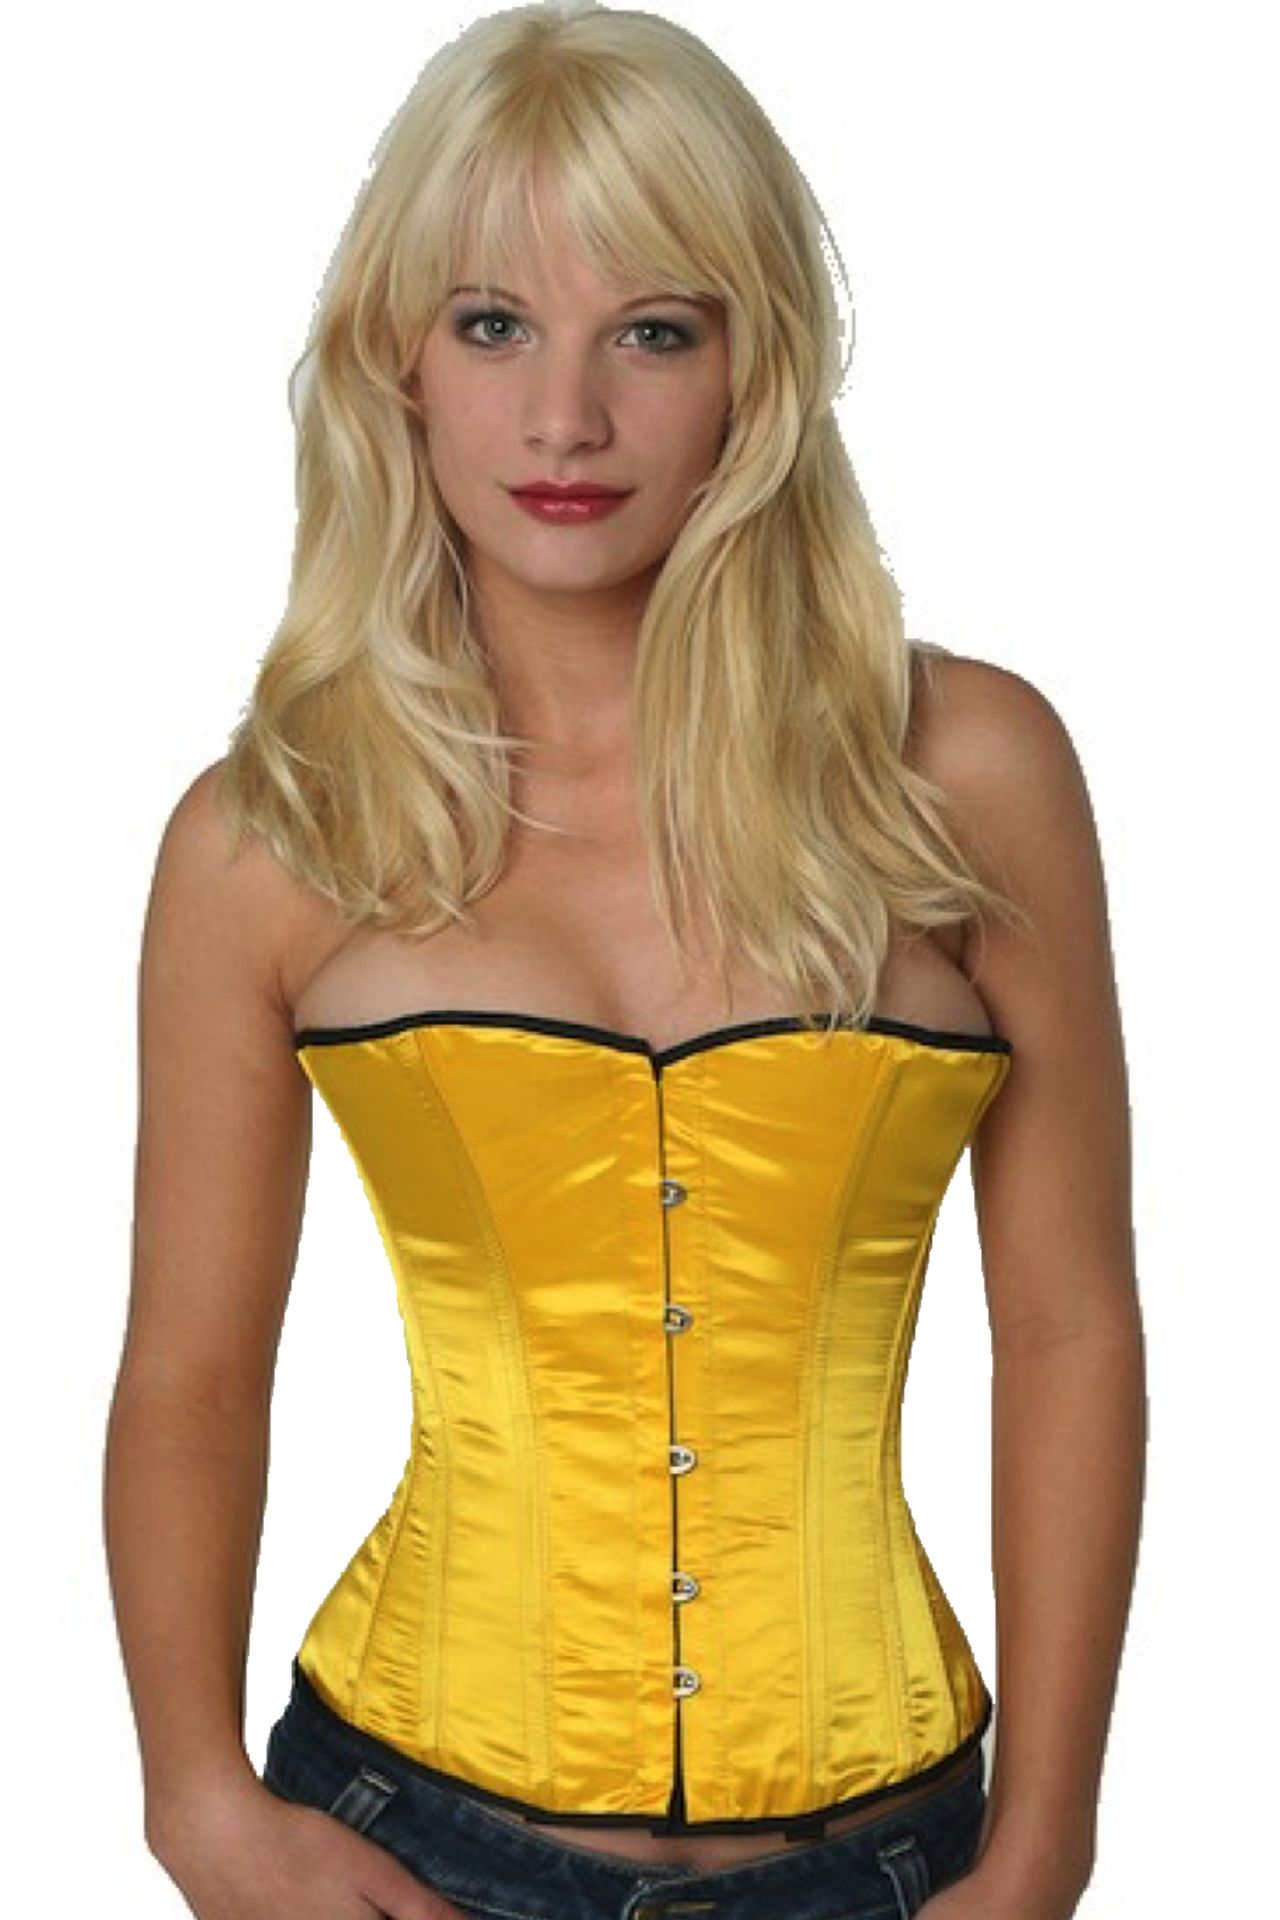 Corse amarillo mango raso medio pecho corset sh13